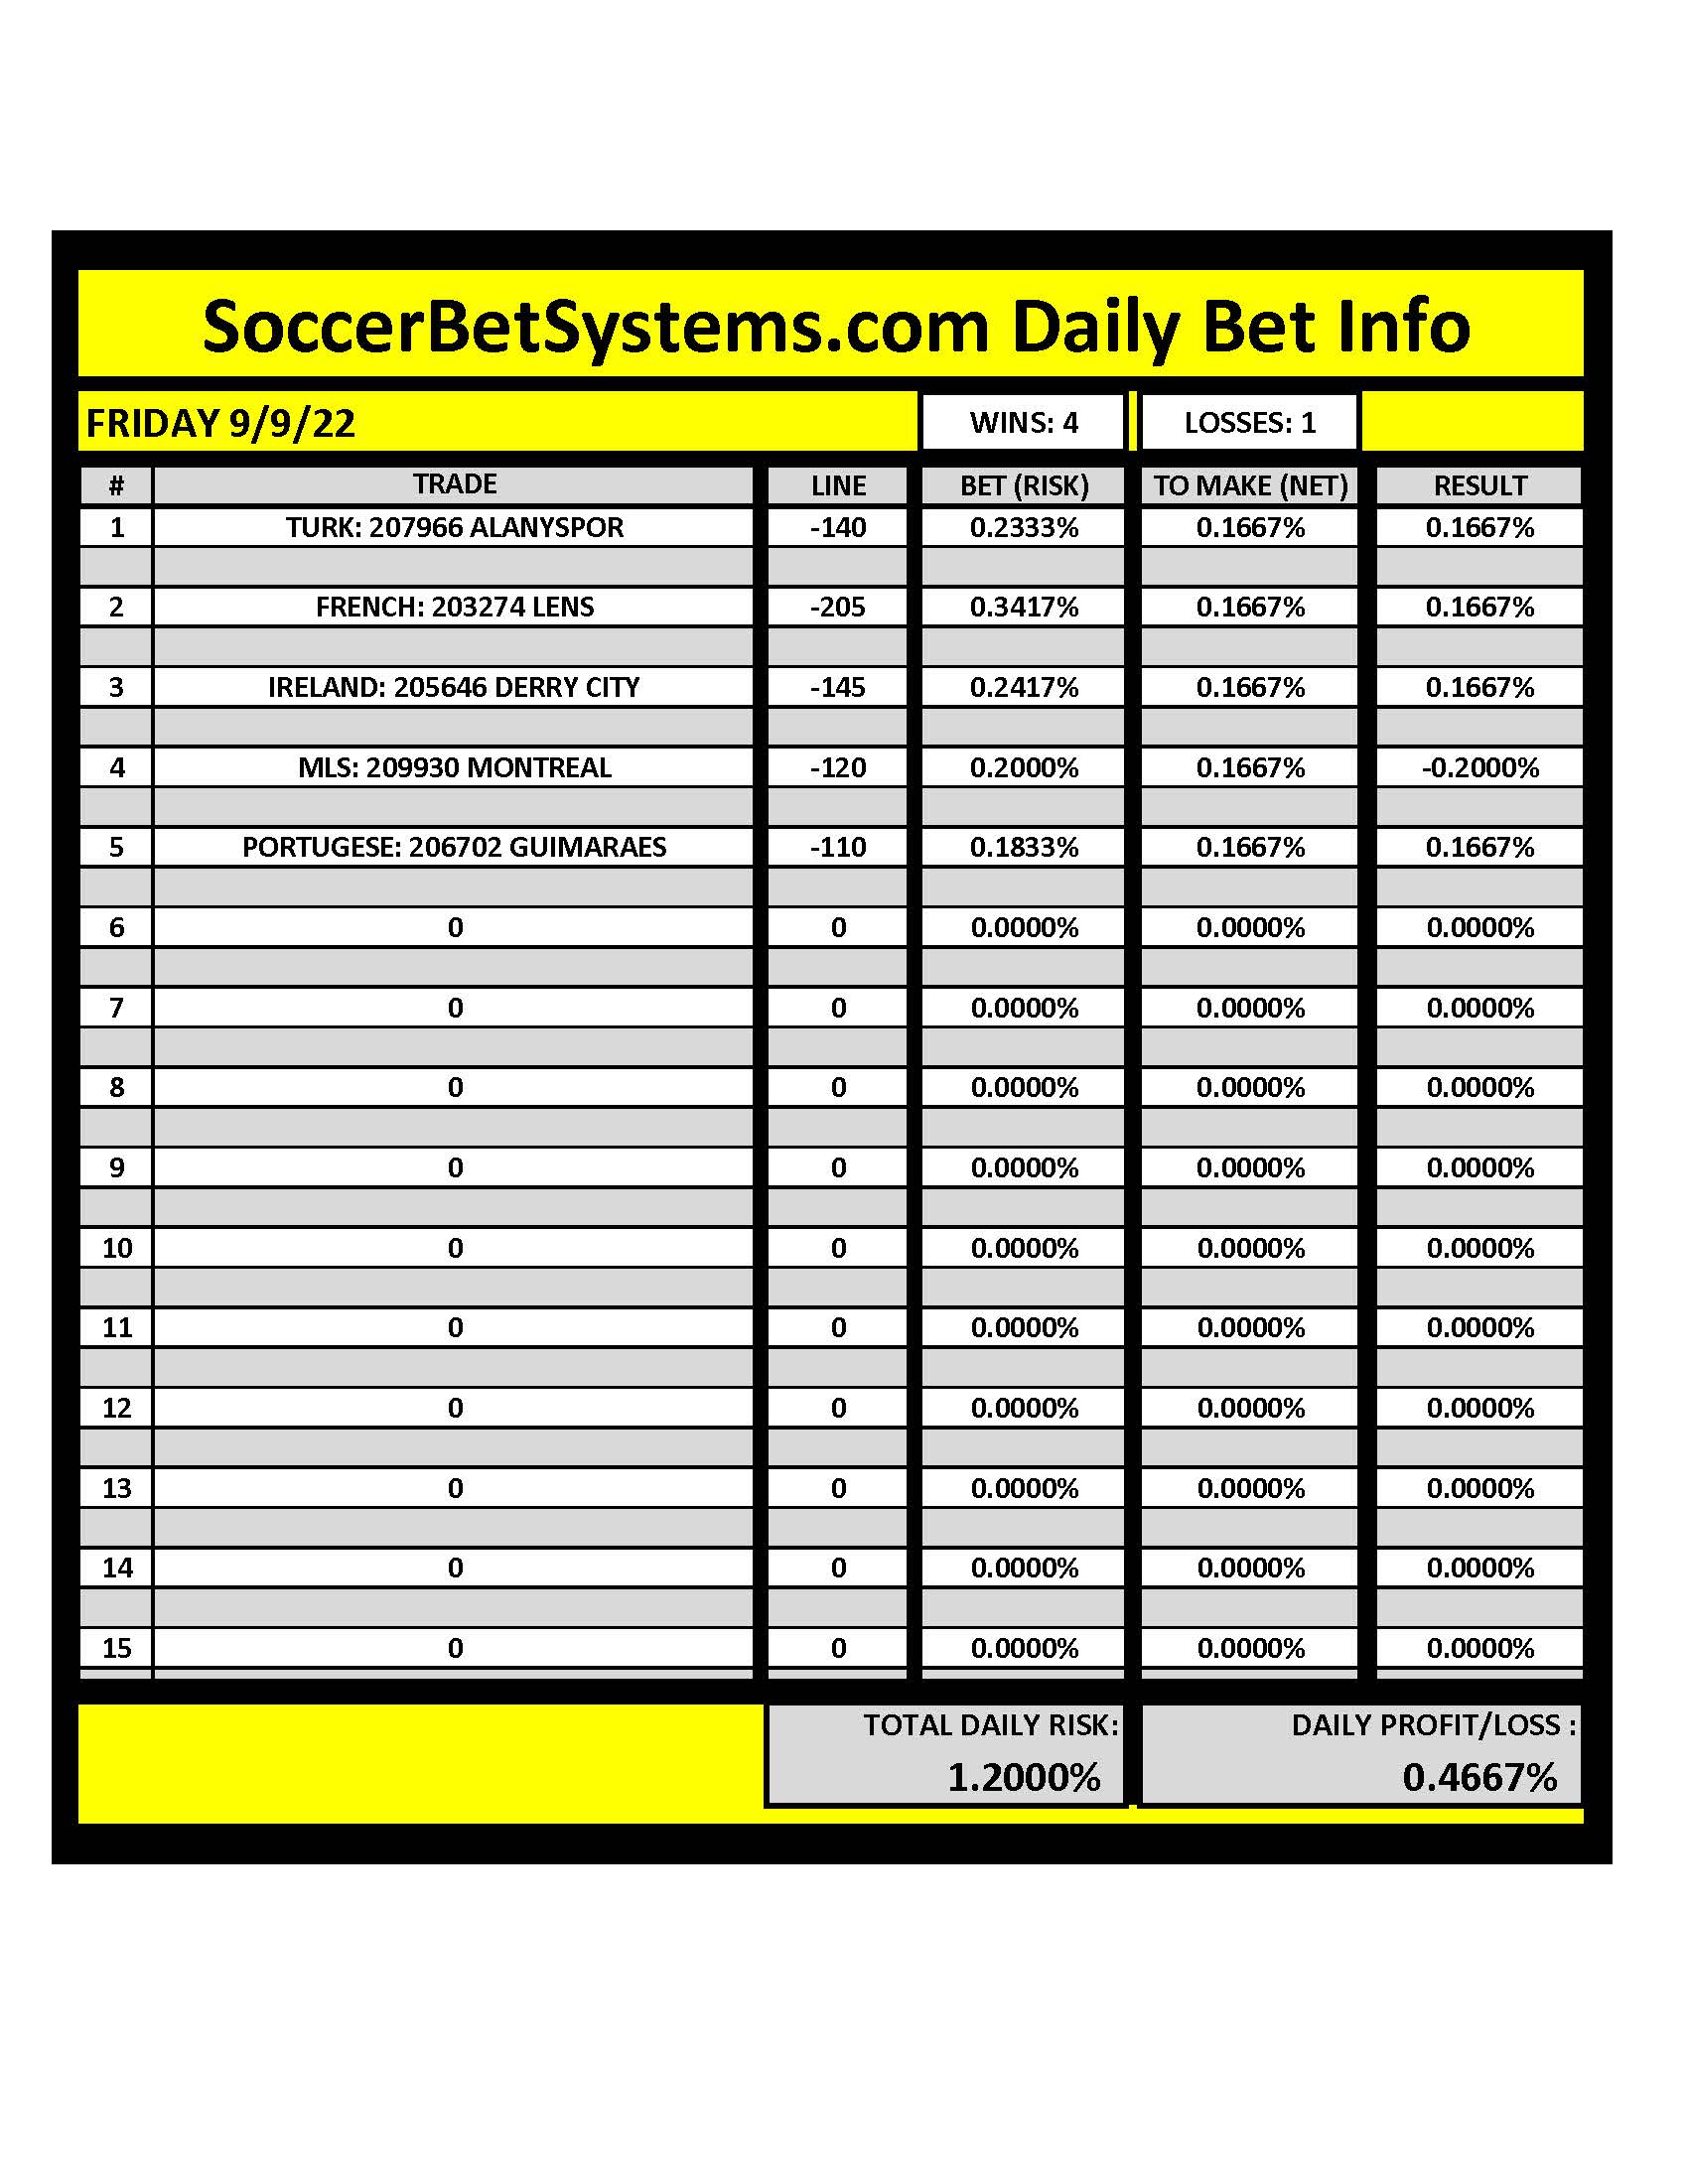 SoccerBetSystems.com 9/9/22 Daily Results